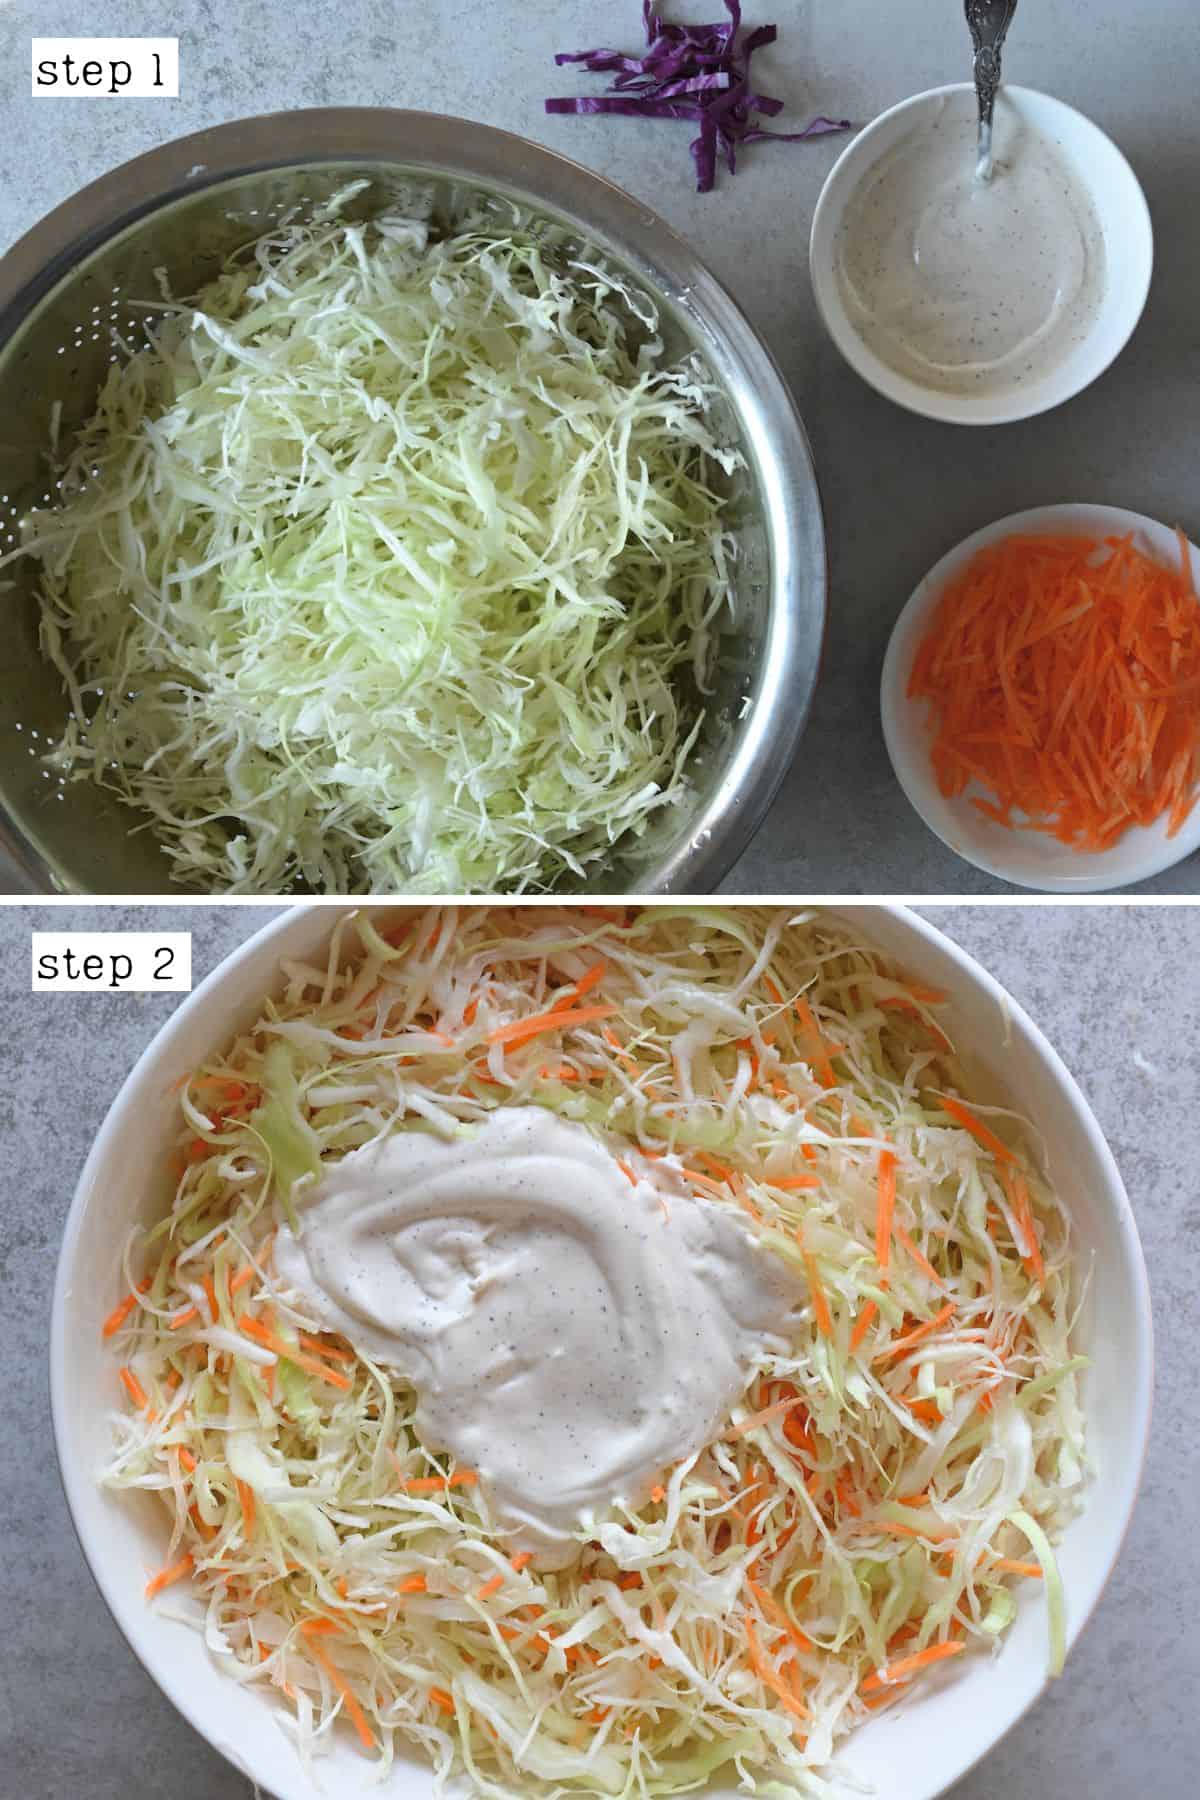 Steps for preparing coleslaw